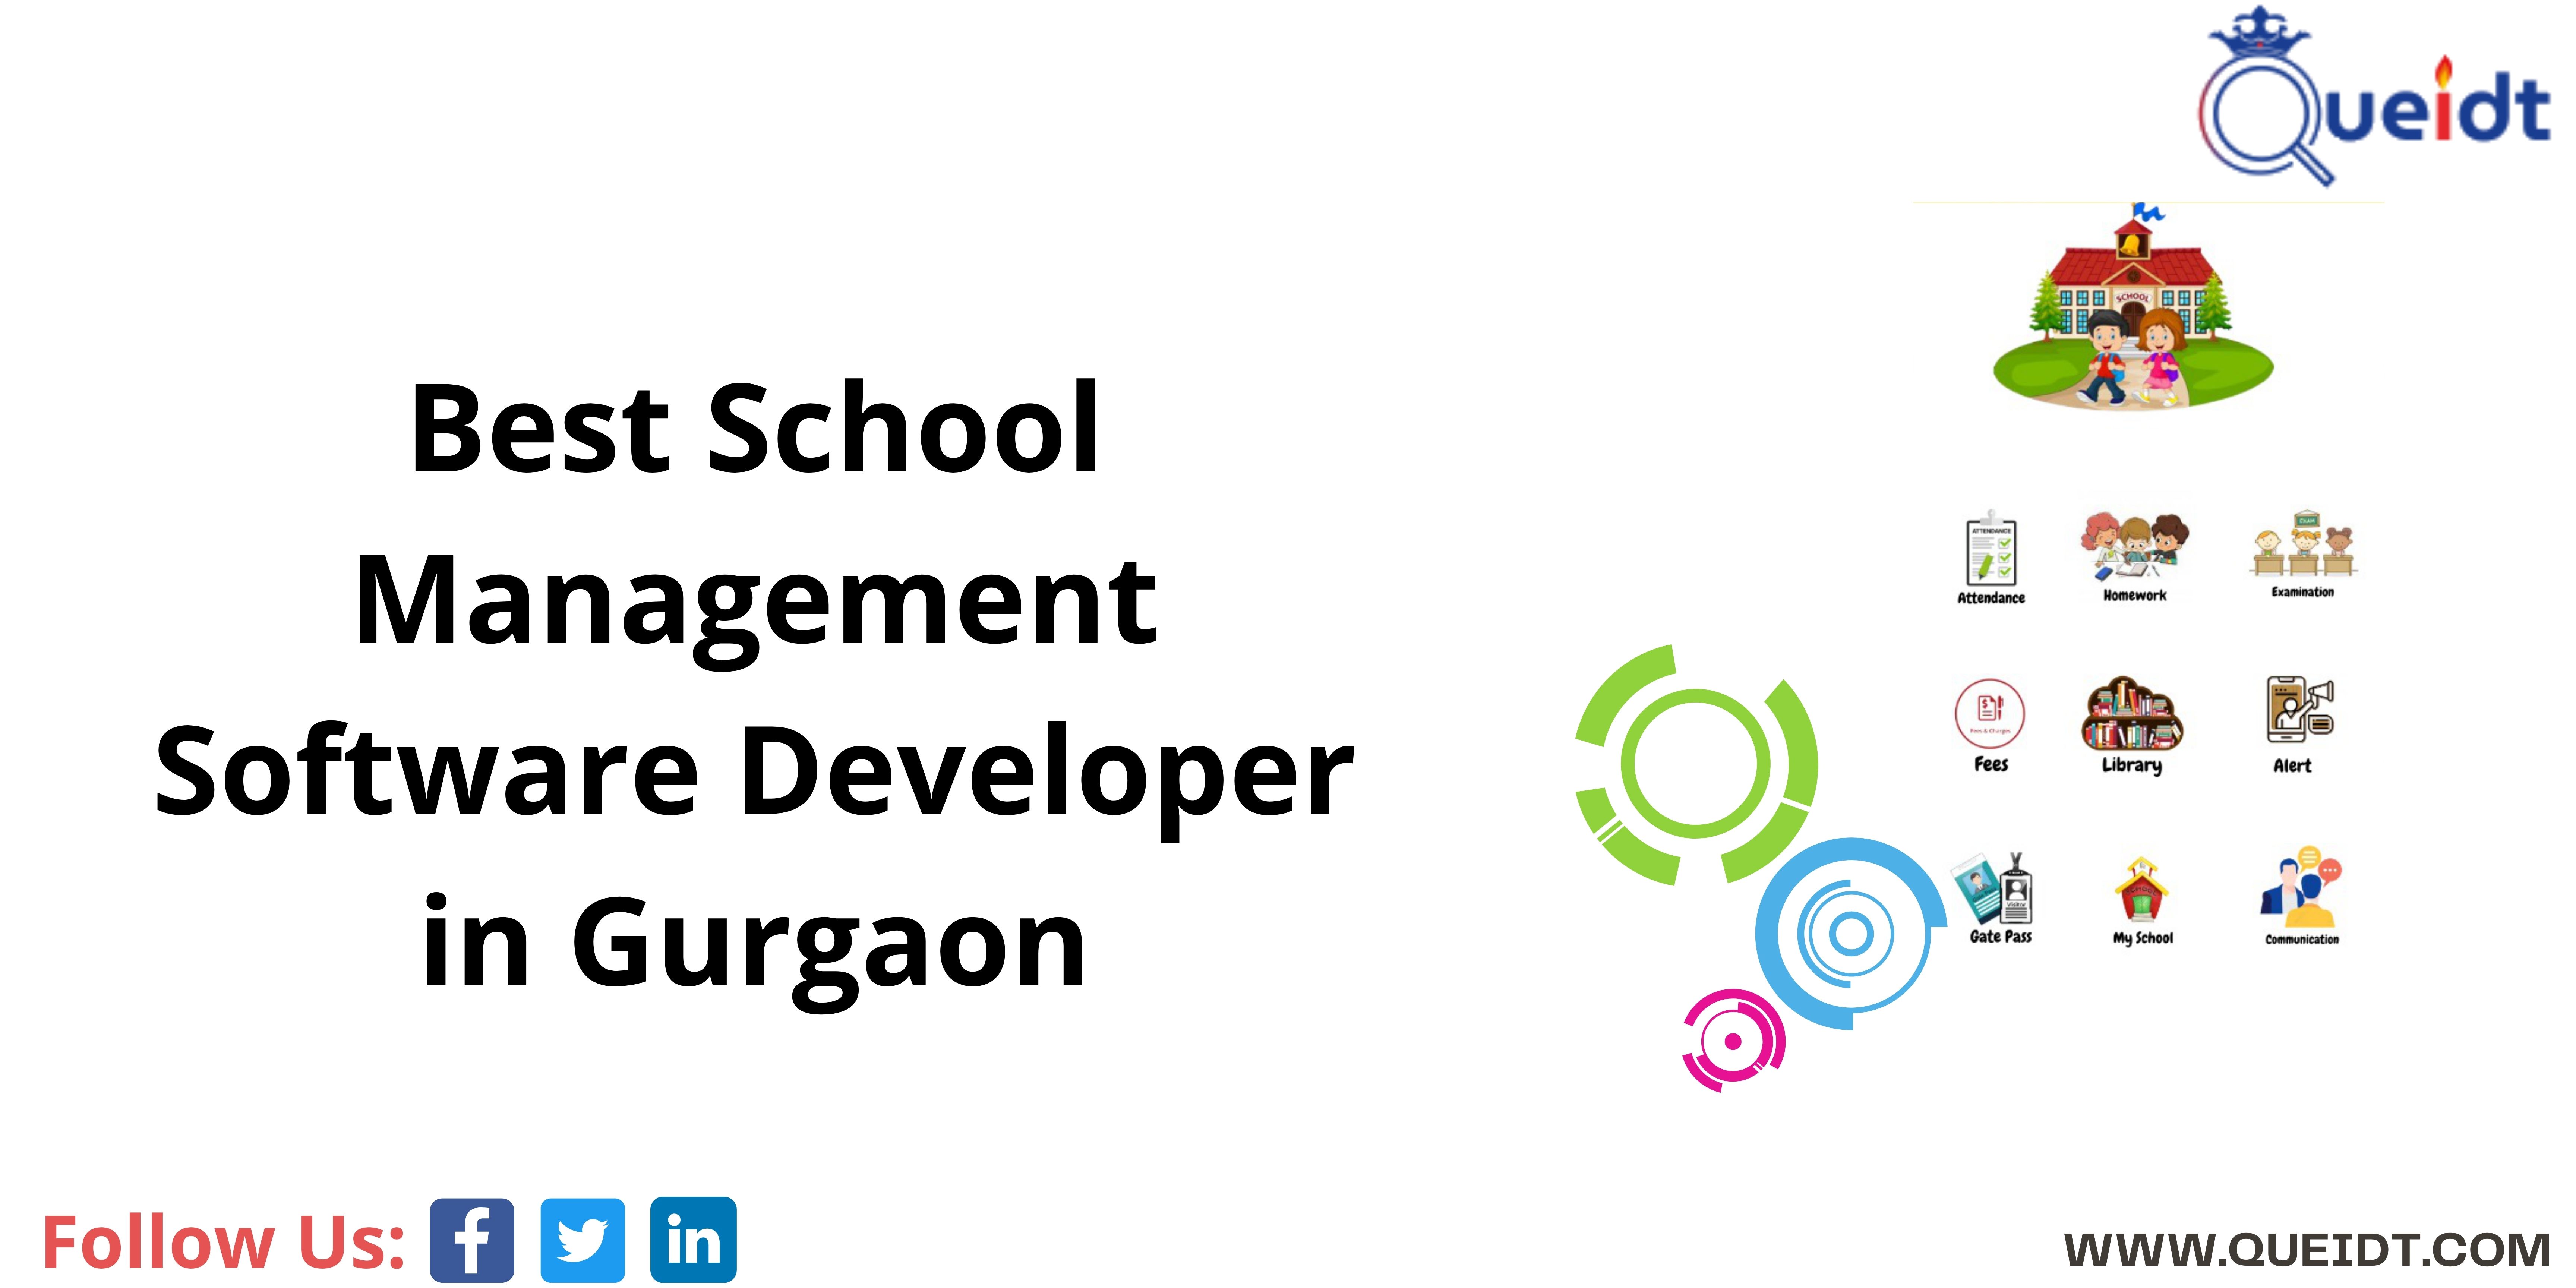 Best School Management Software Developer in Gurgaon